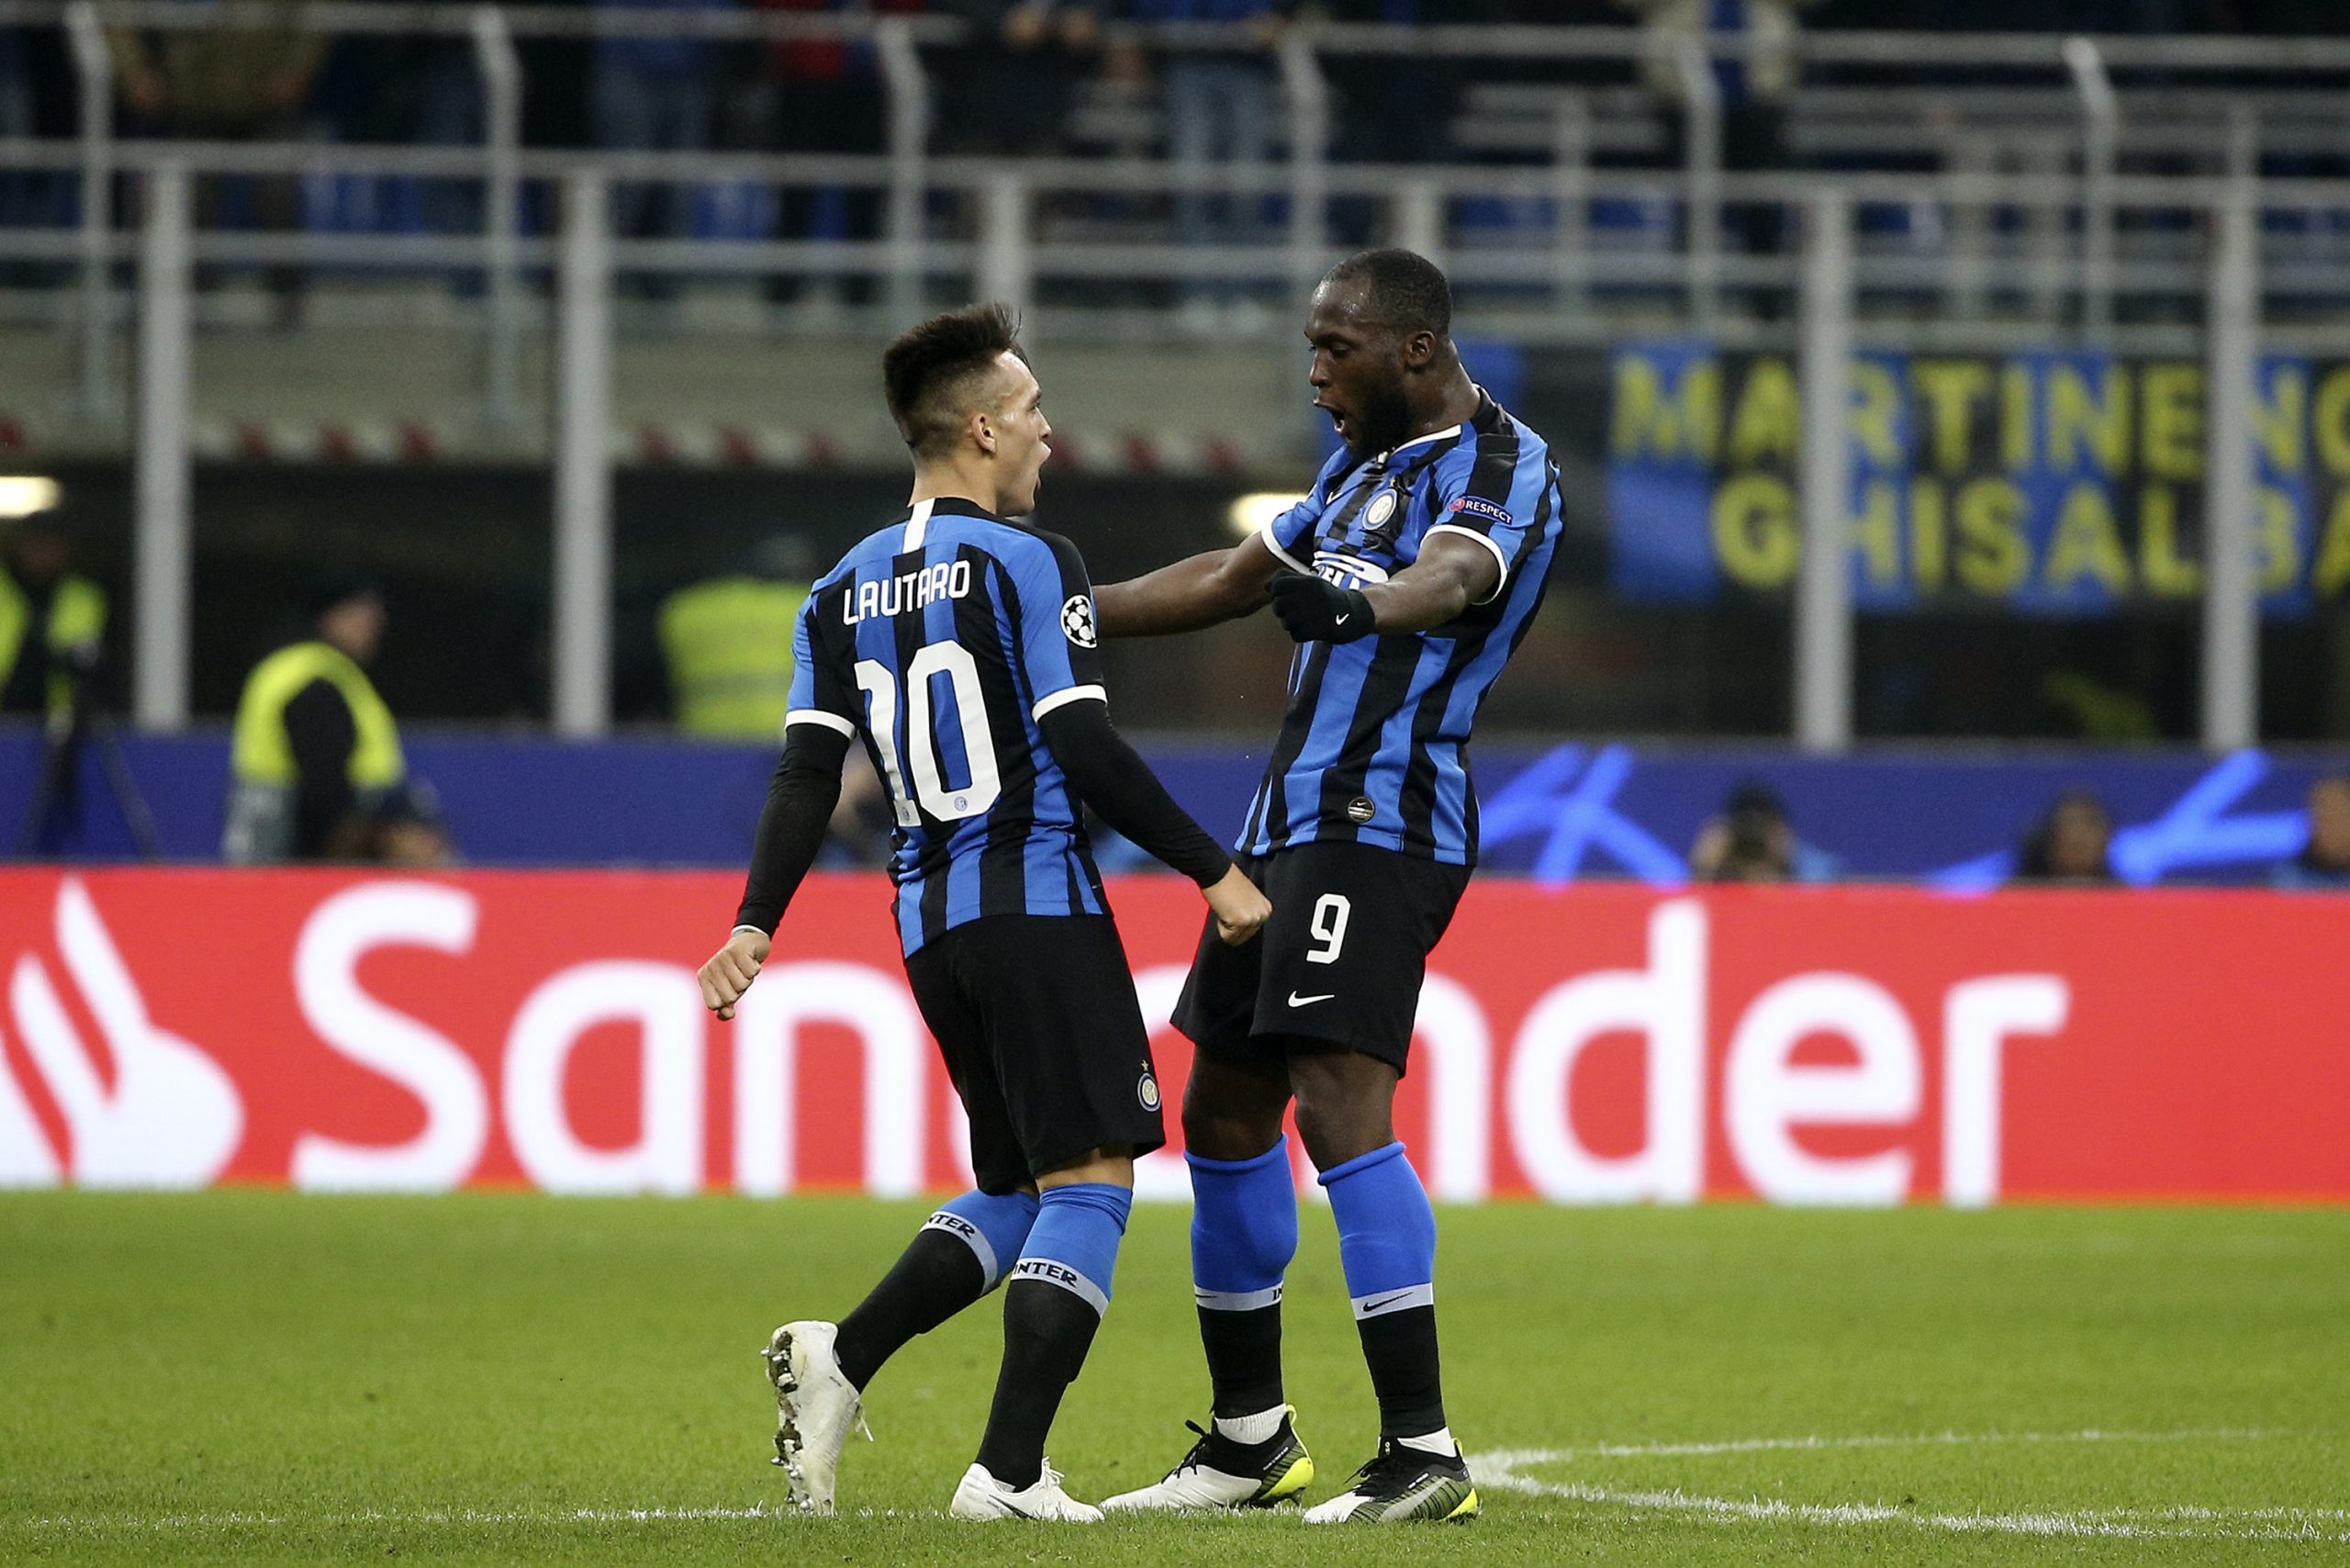 Romelu Lukaku and Lautaro Martínez give Antonio Conte’s Inter Milan a superstar strike partnership